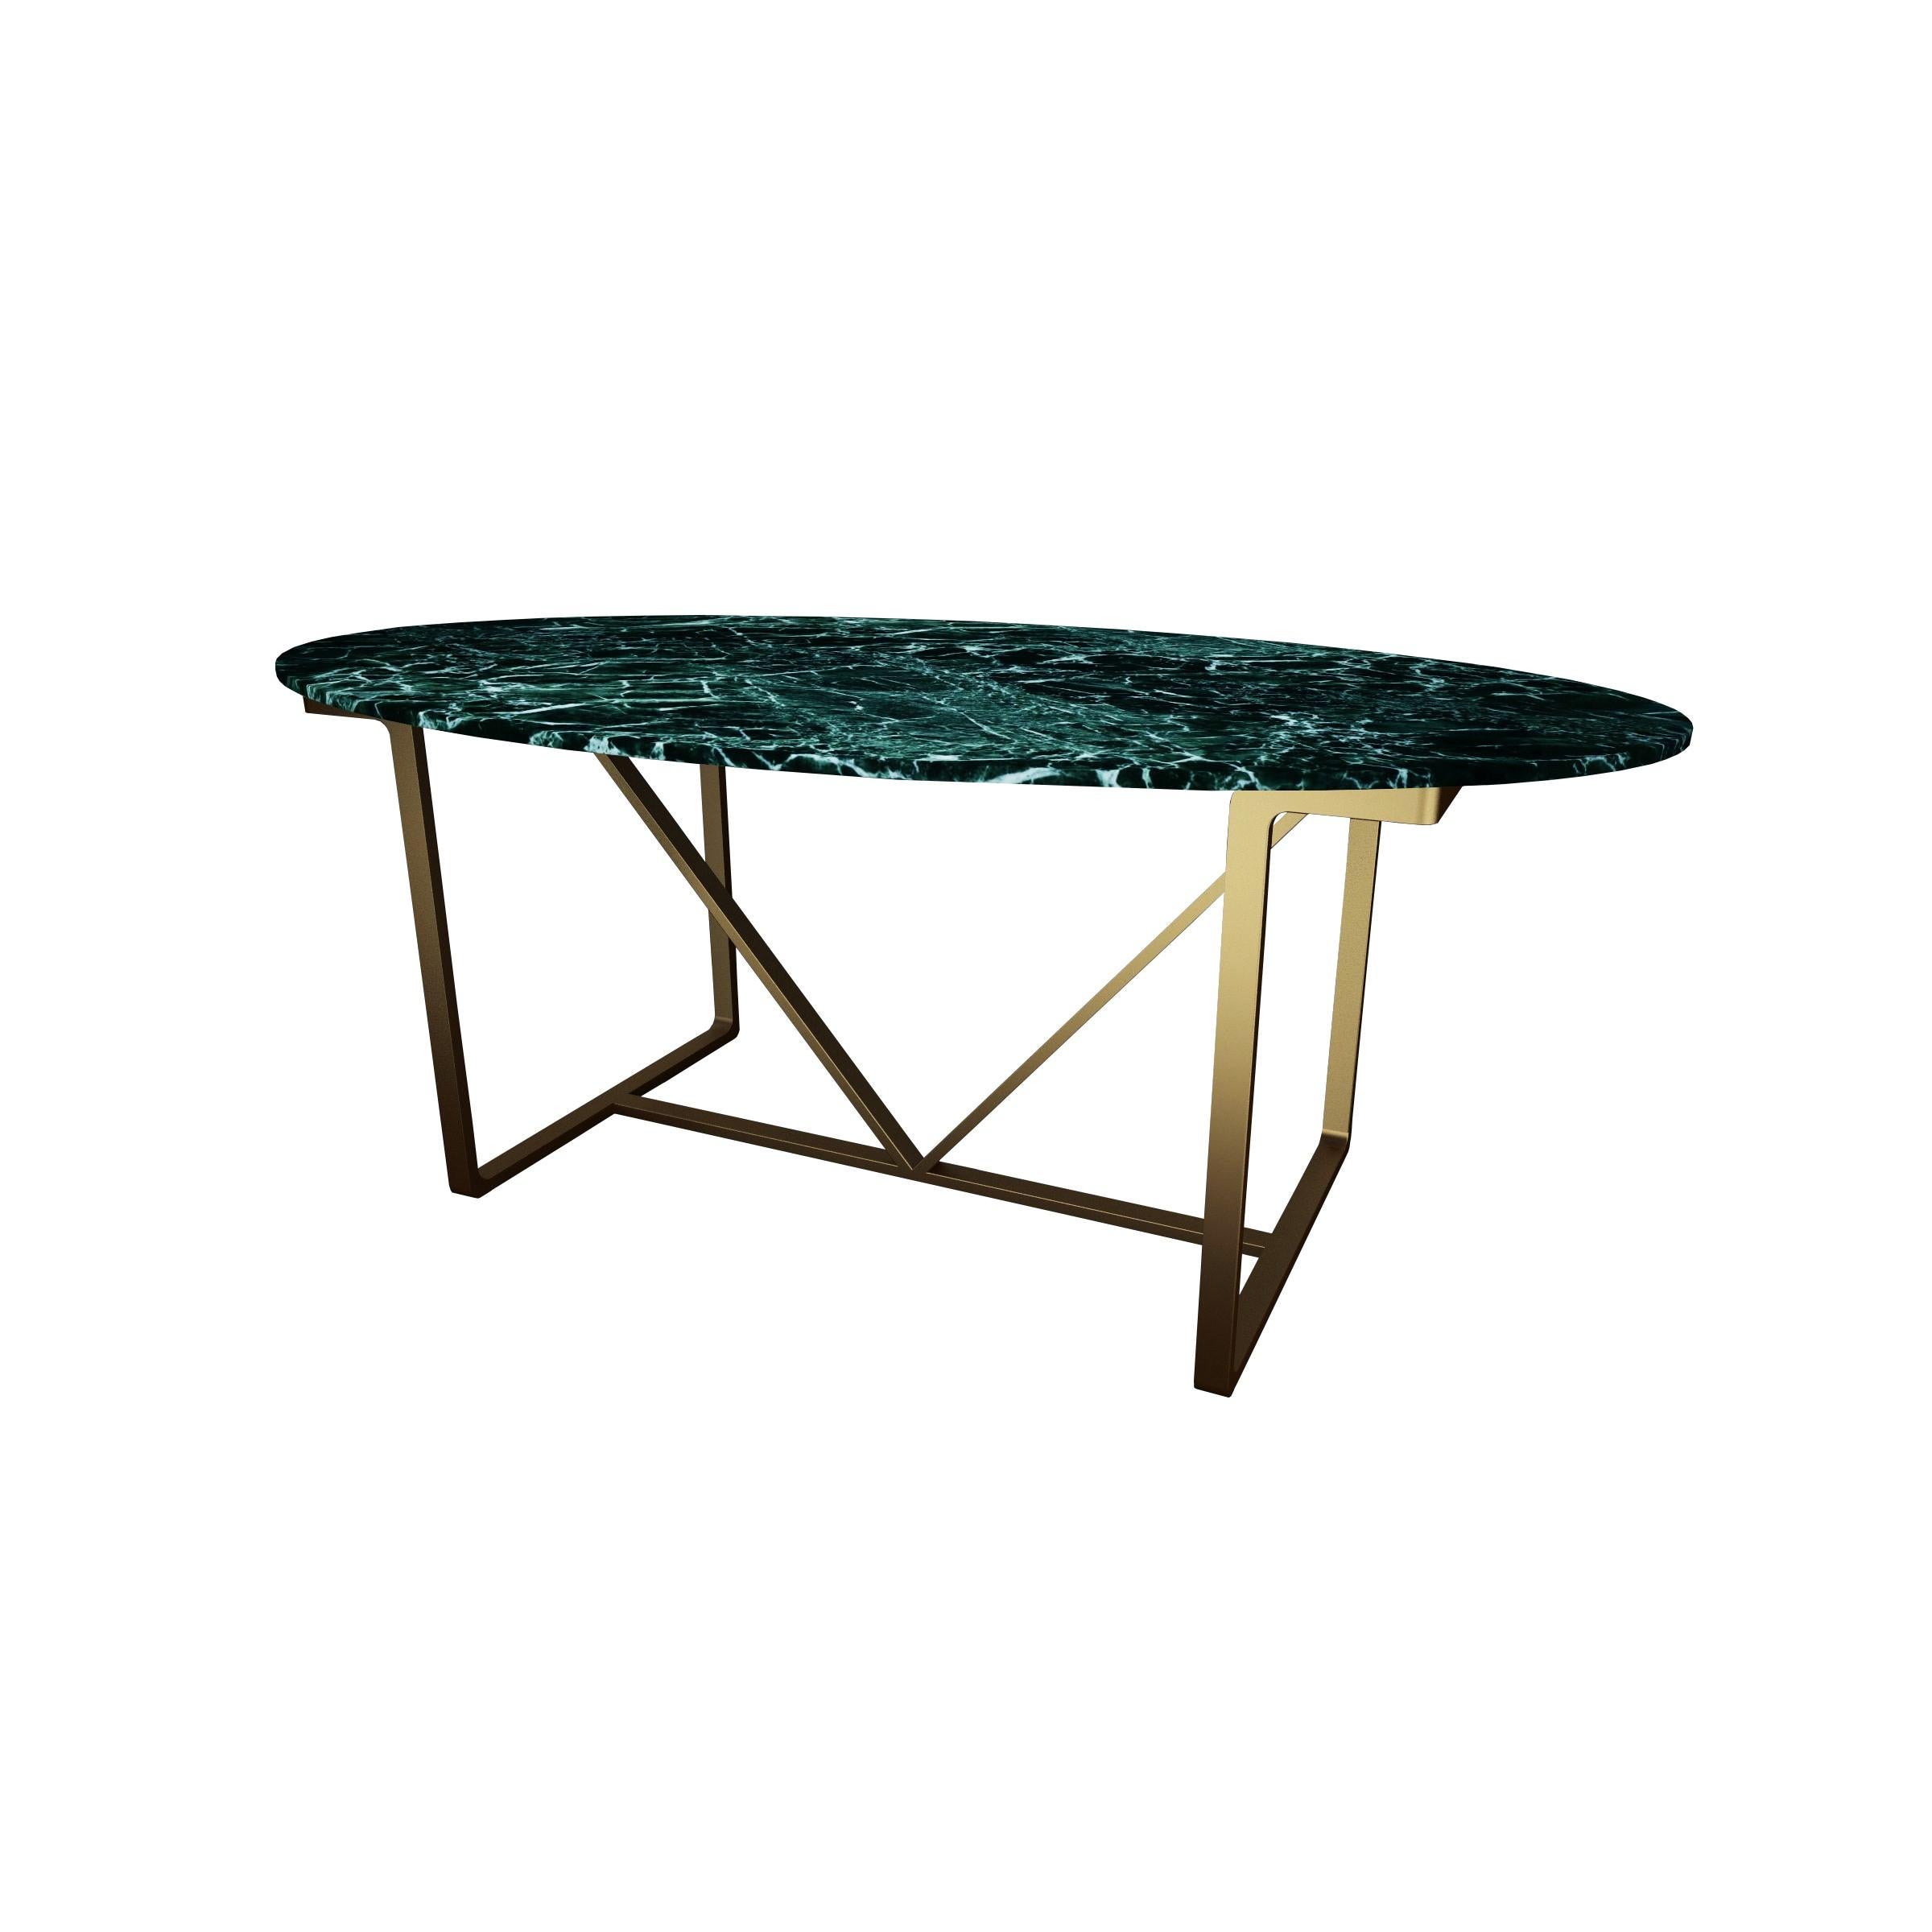 Scandinavian Modern NORDST JERRY Dining Table, Italian Grey Rain Marble, Danish Modern Design, New For Sale